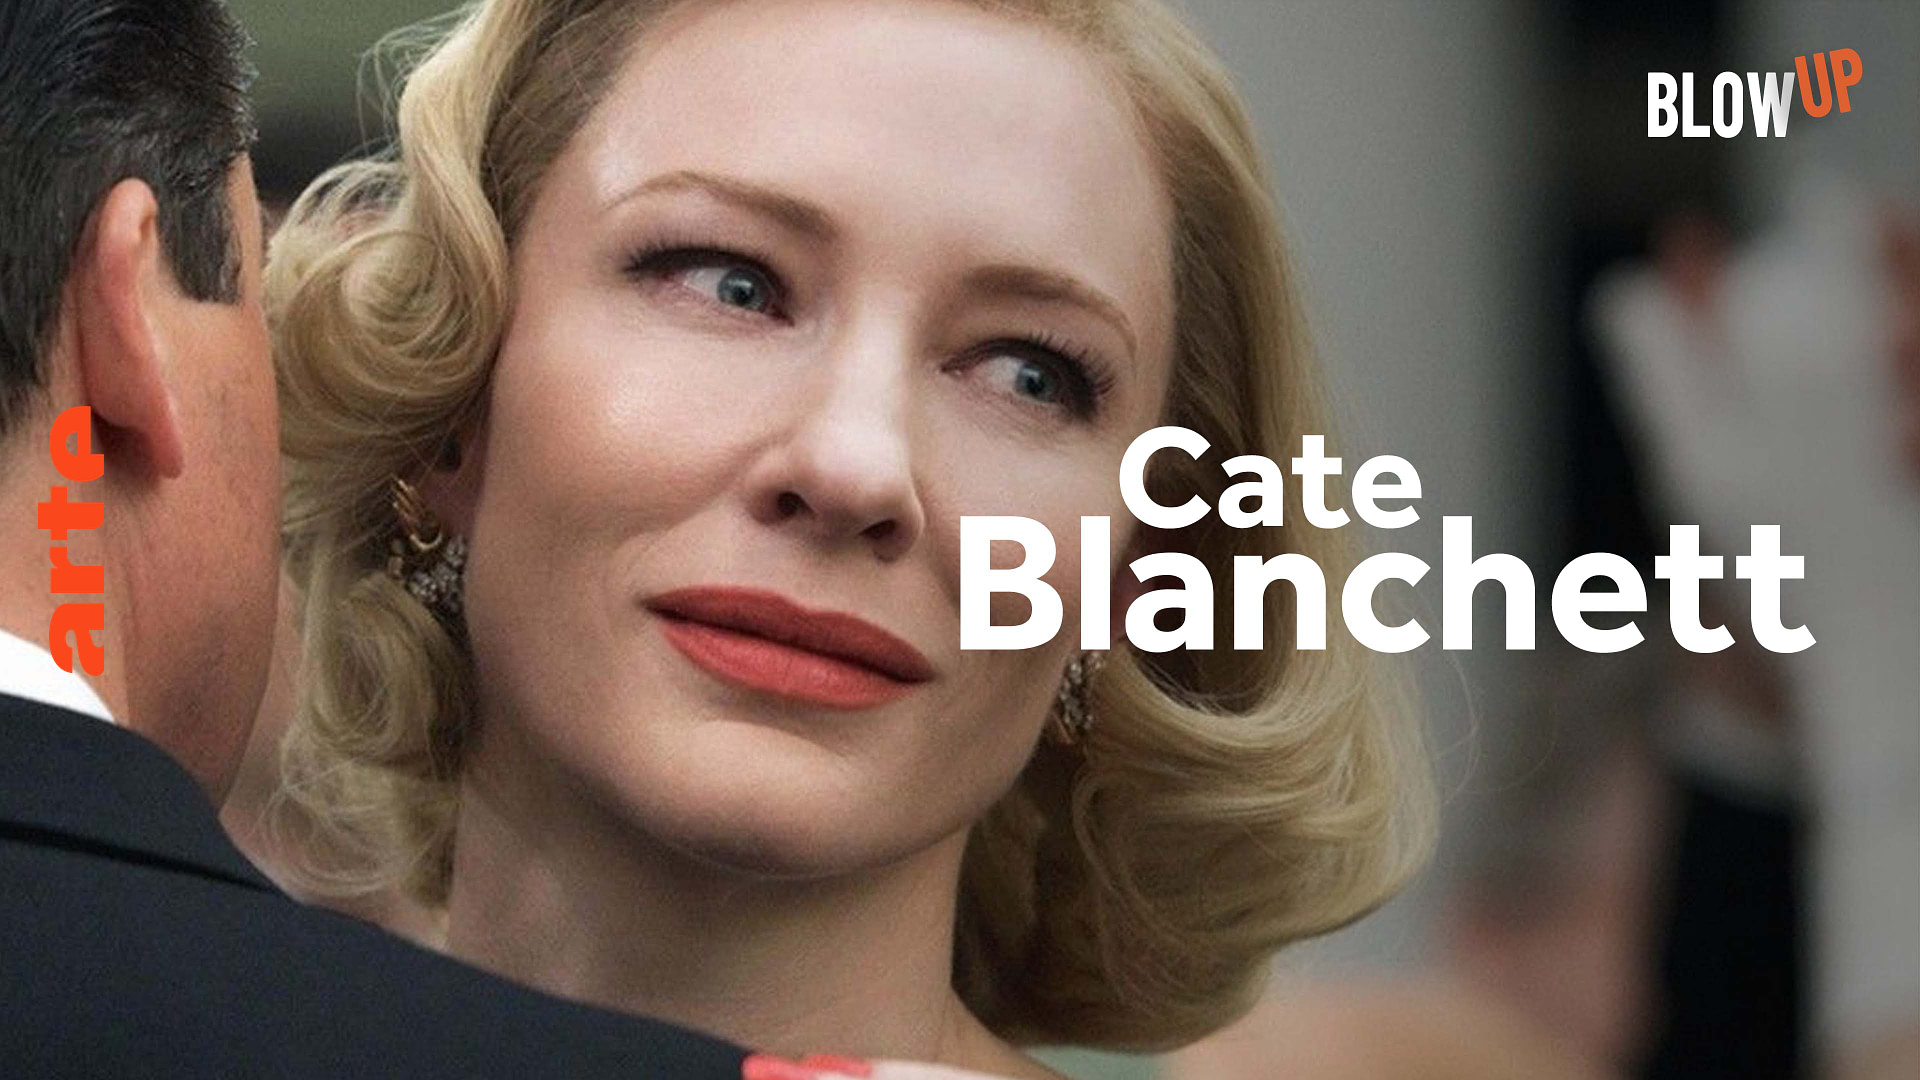 Blow up - Worum geht's bei Cate Blanchett?